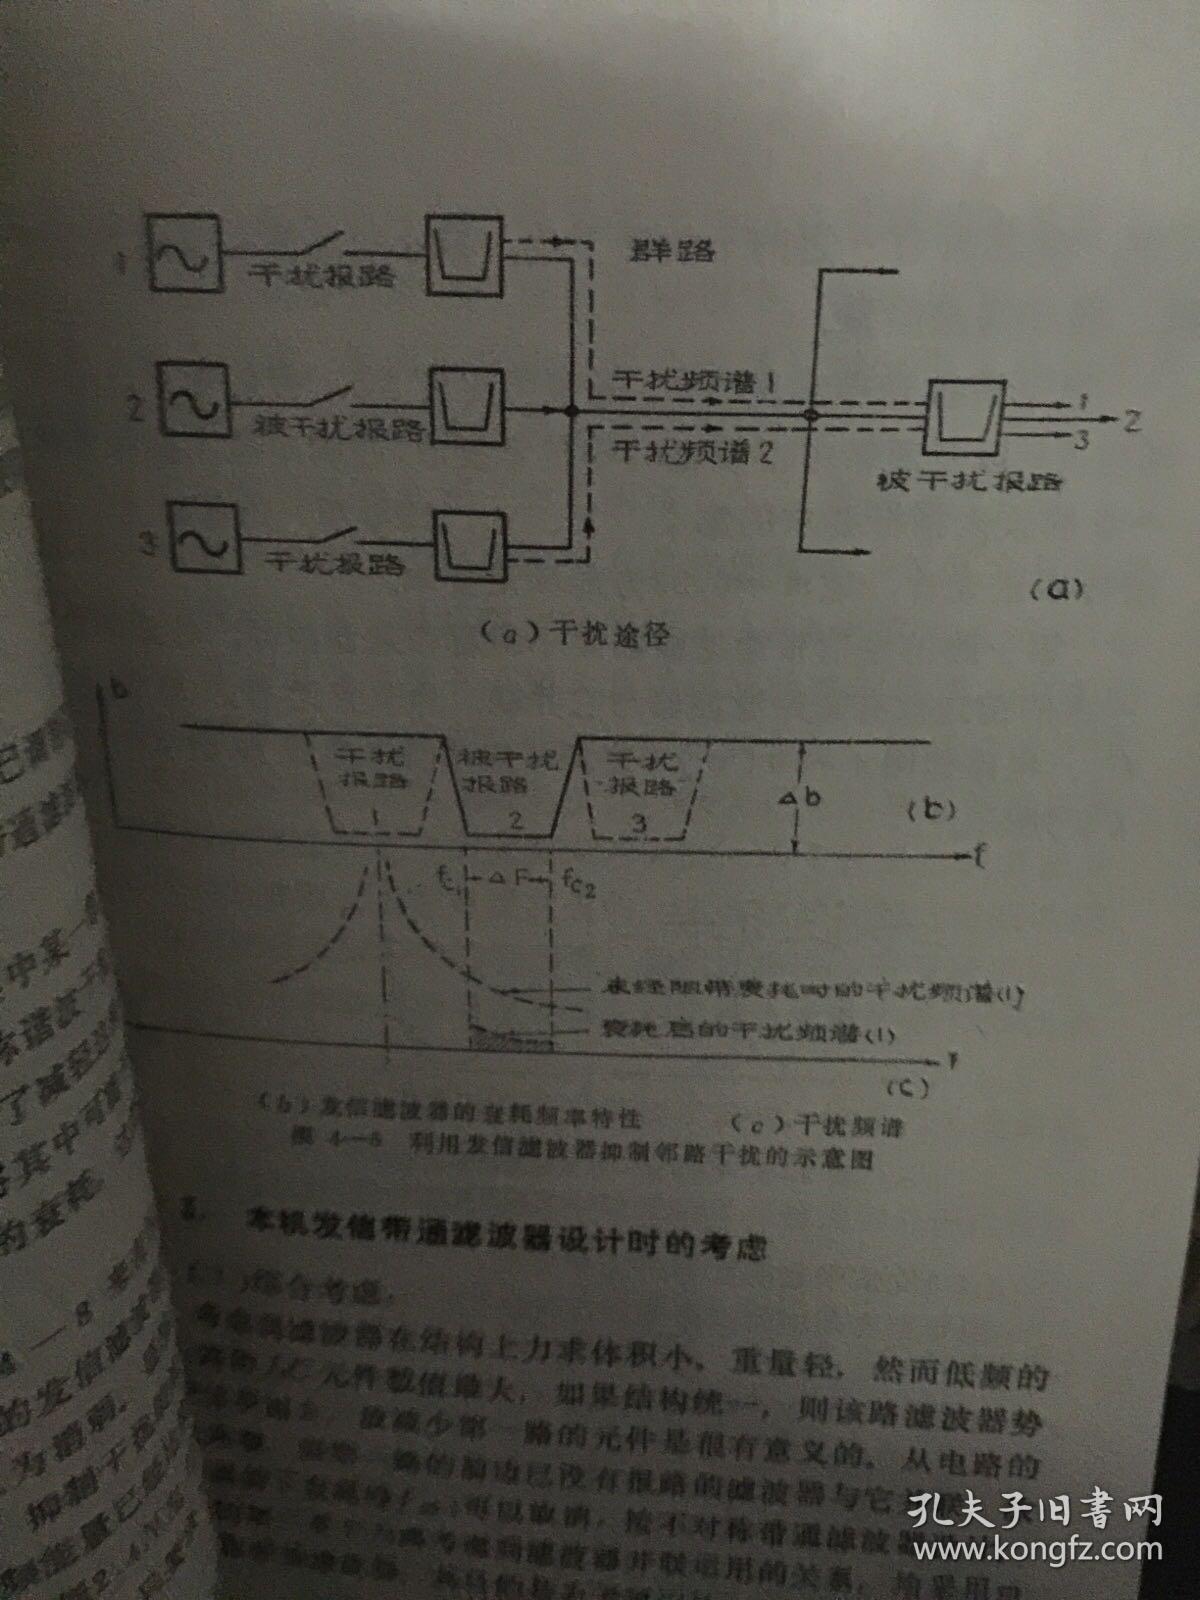 ZB—319晶体管载波电报机维护手册